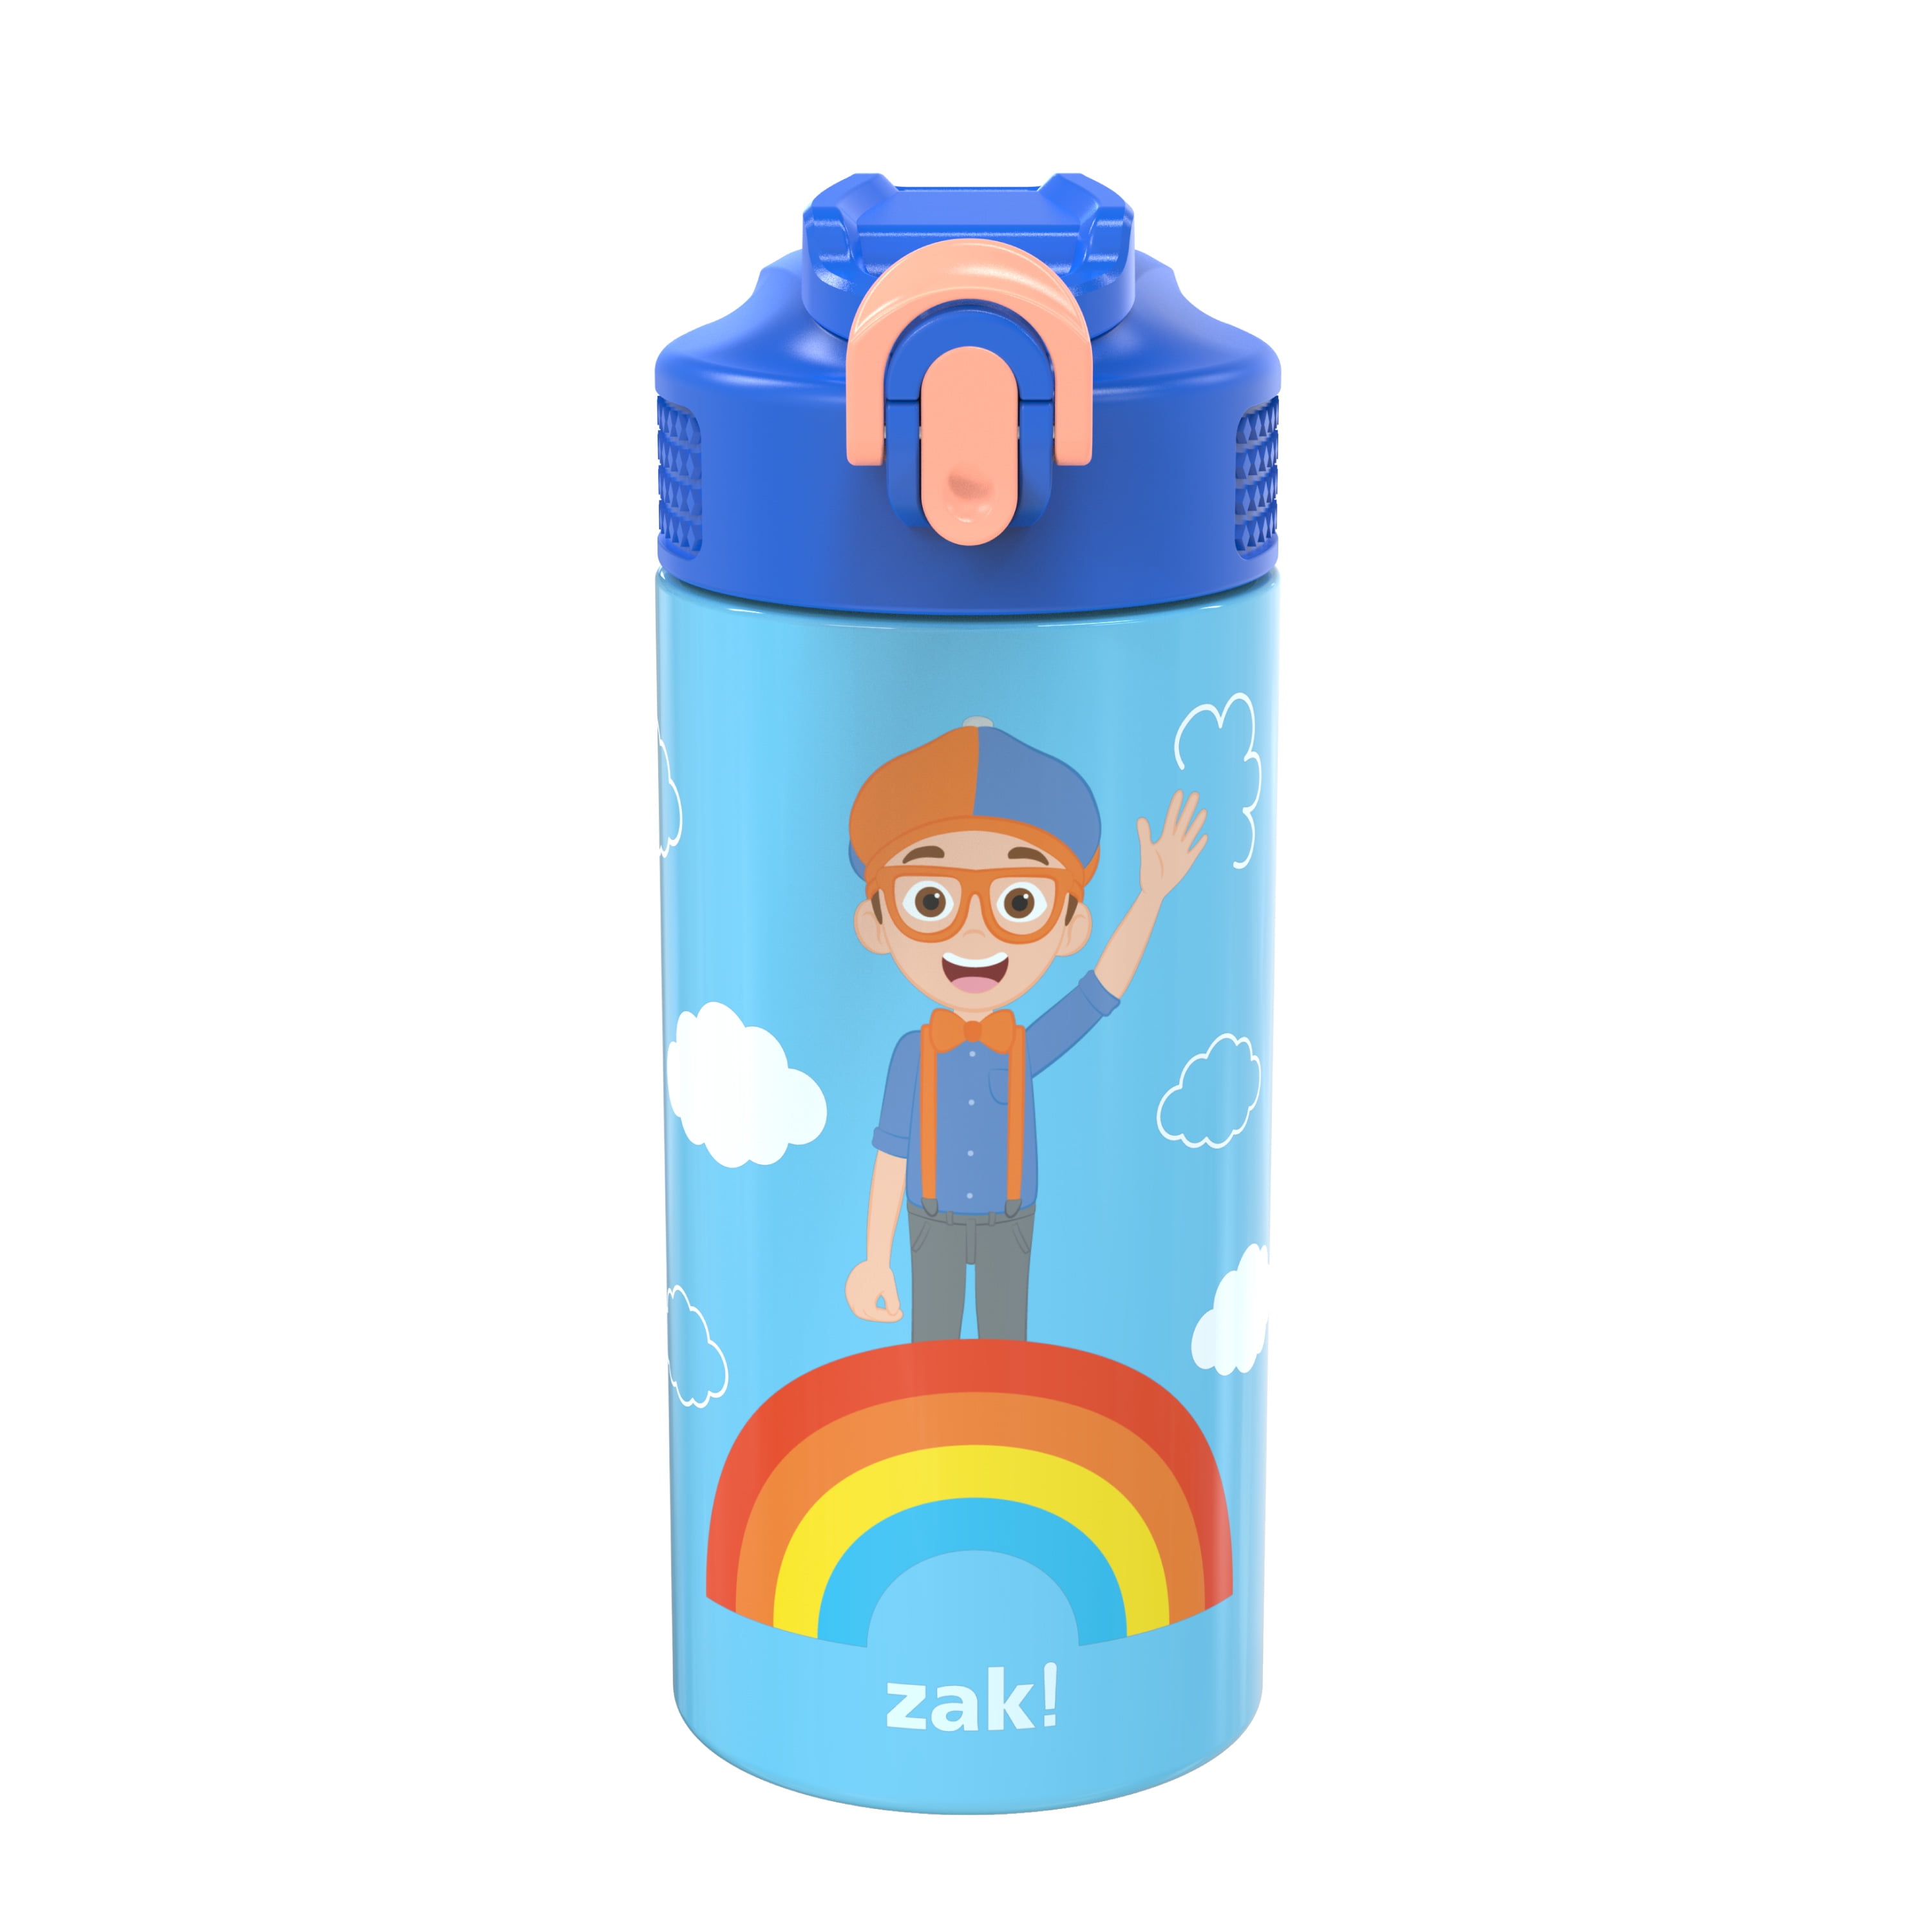 Zak Designs Bluey Kids Bottle 2-pack $9.99 (Retail $13.48)